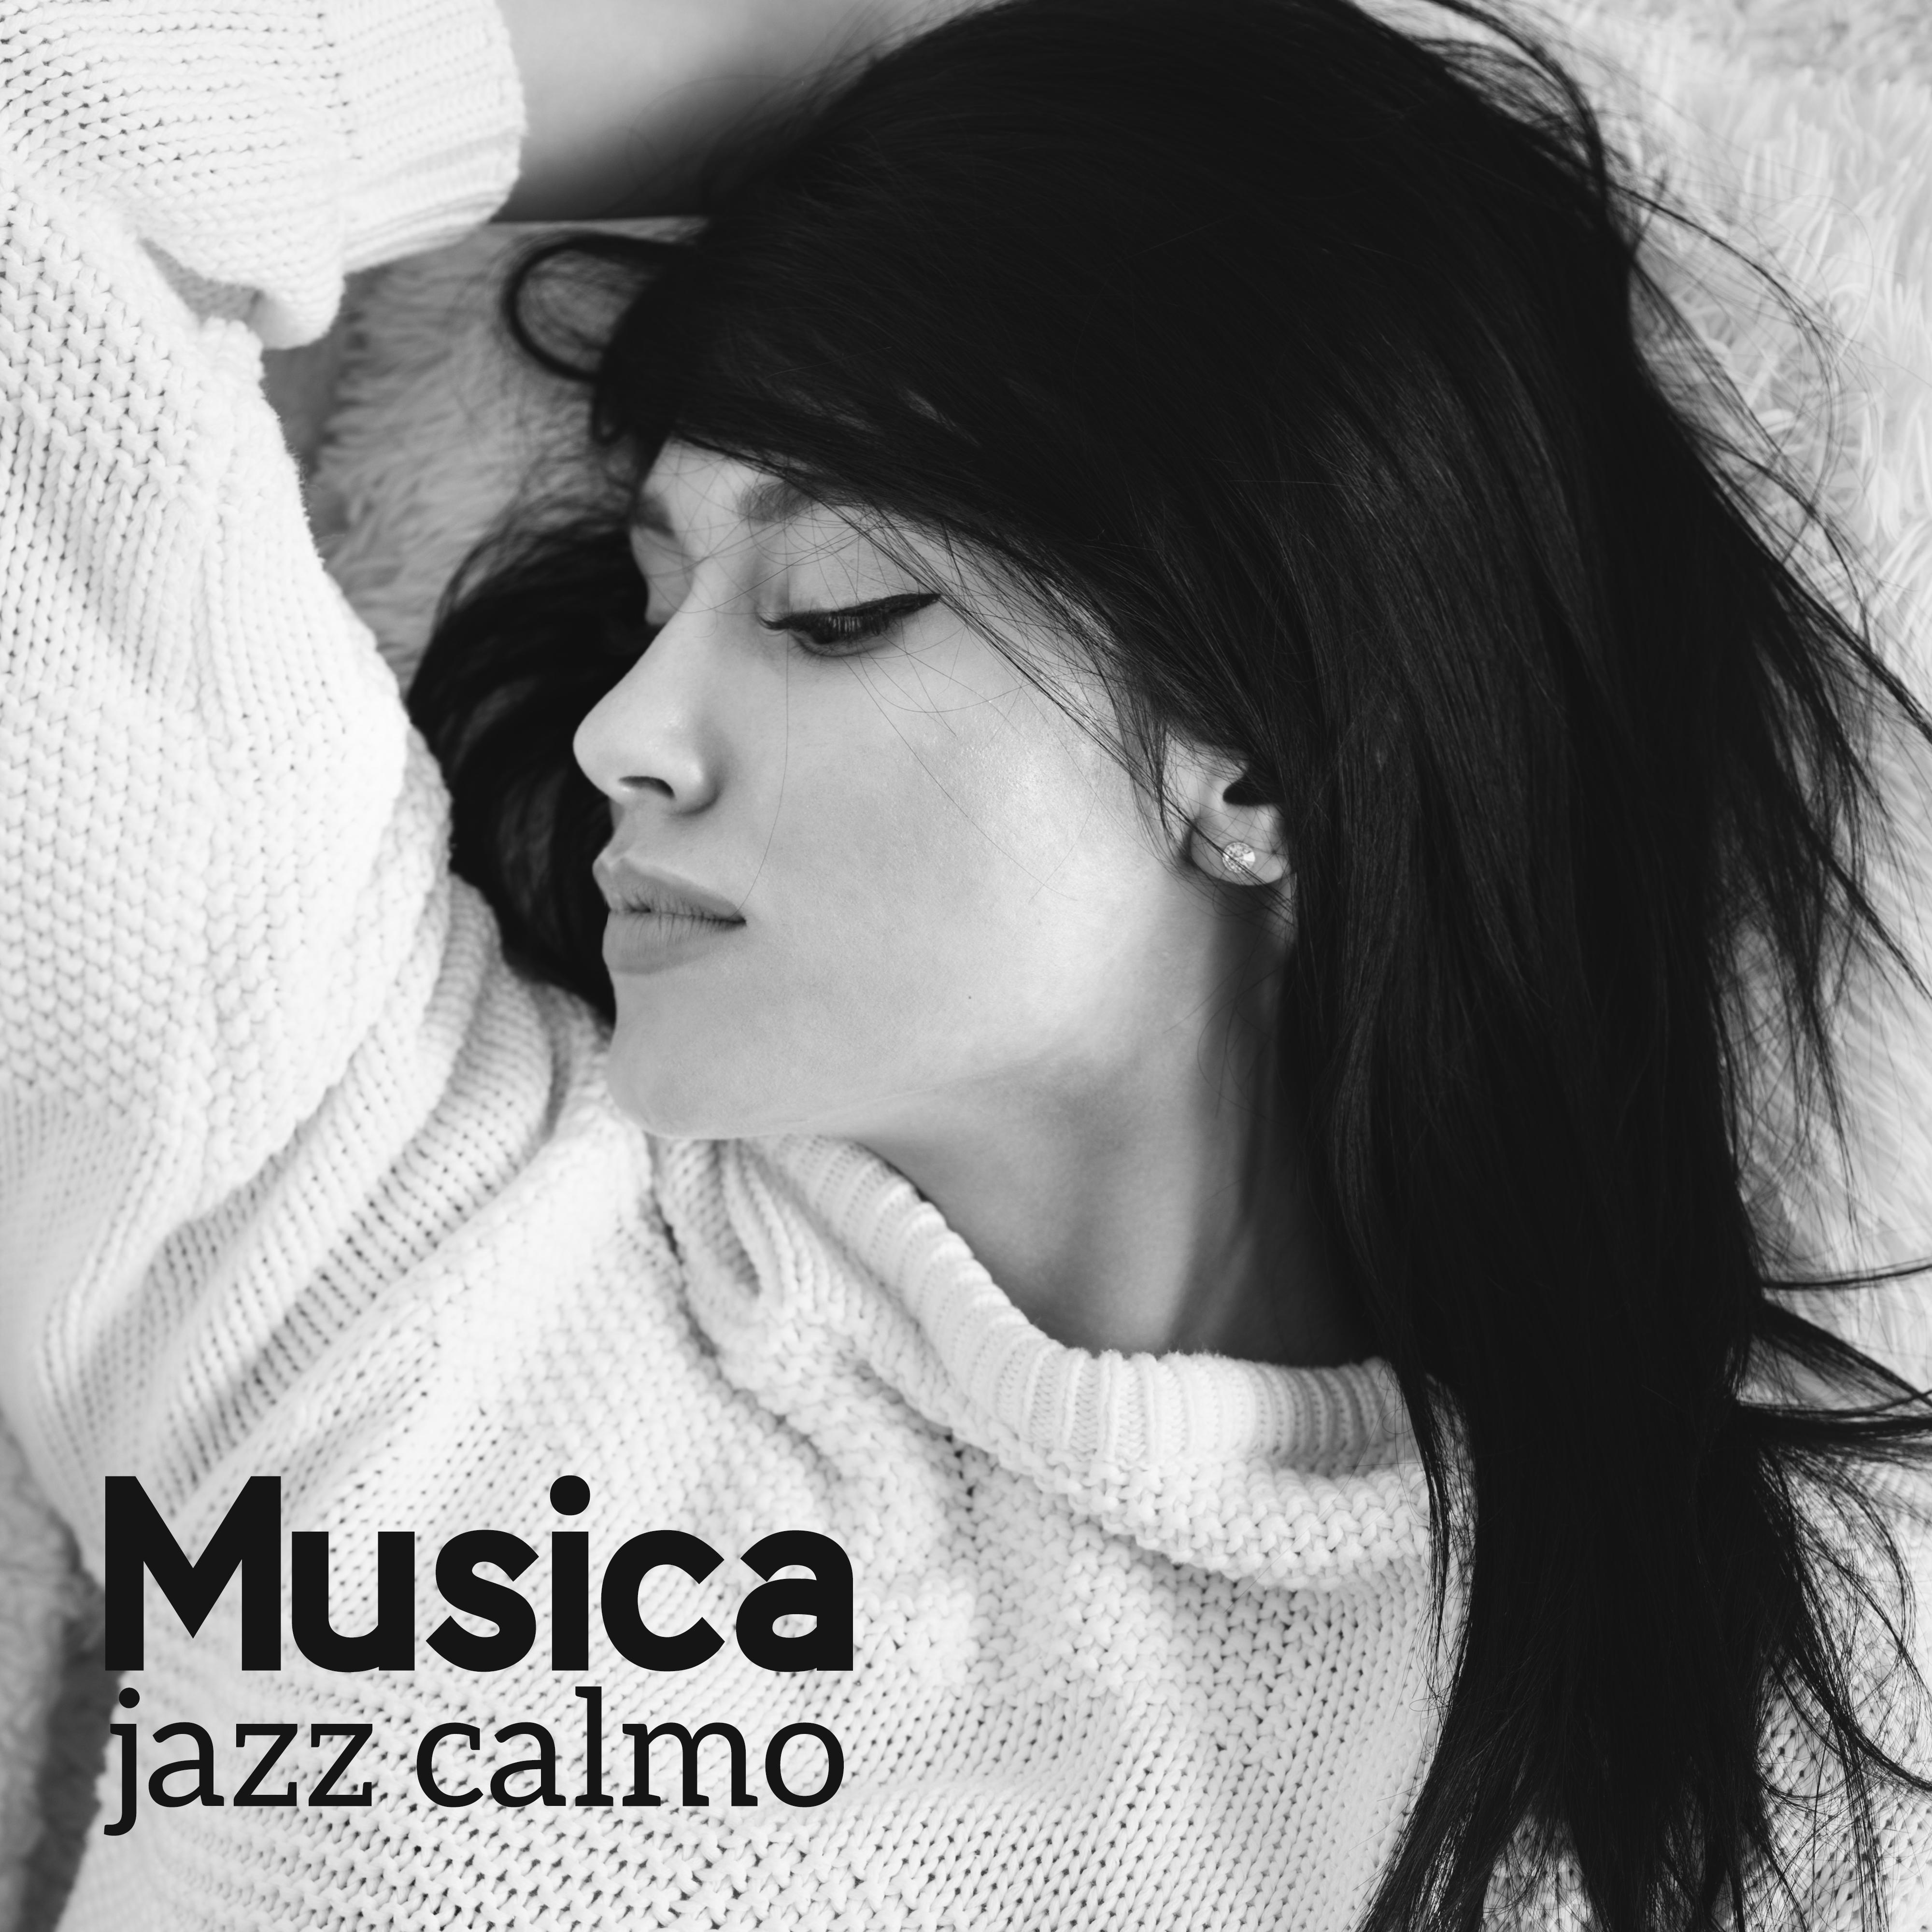 Musica jazz calmo